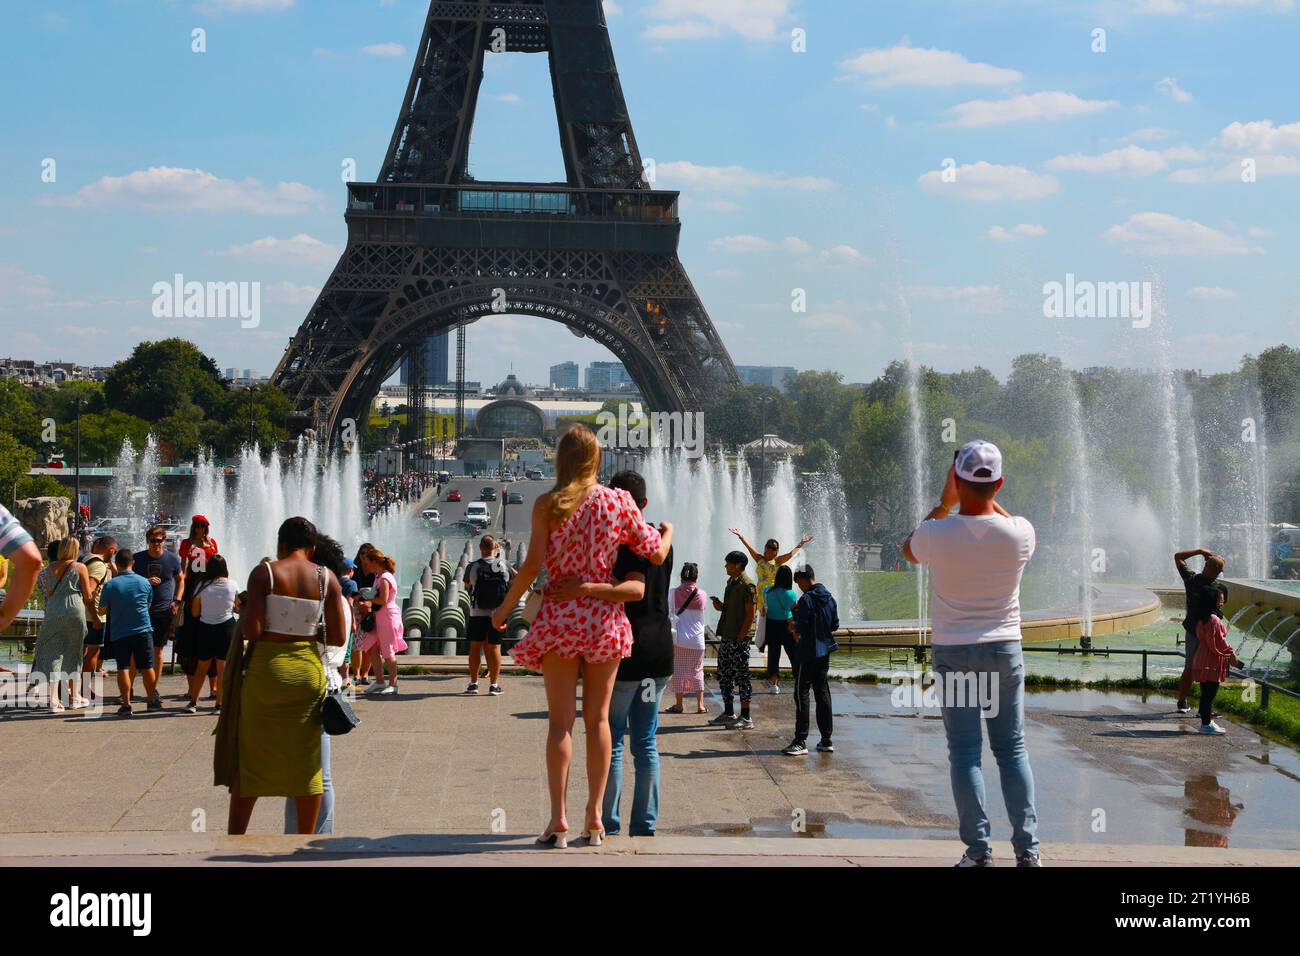 La Torre Eiffel vista dal Parco del Trocadero, attraverso la Senna. Foto Stock